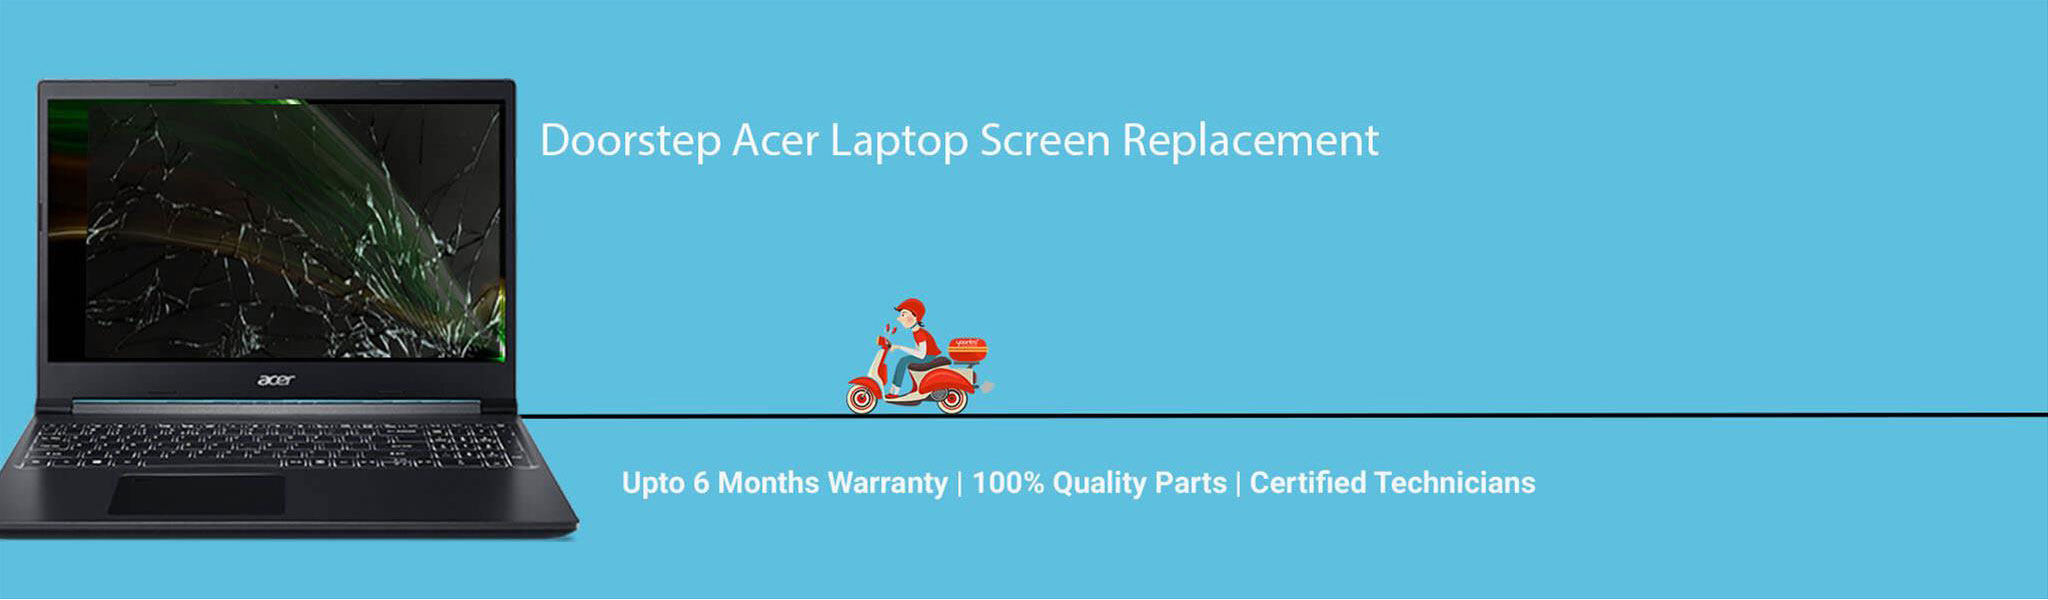 acer-laptop-screen-replacement.jpg